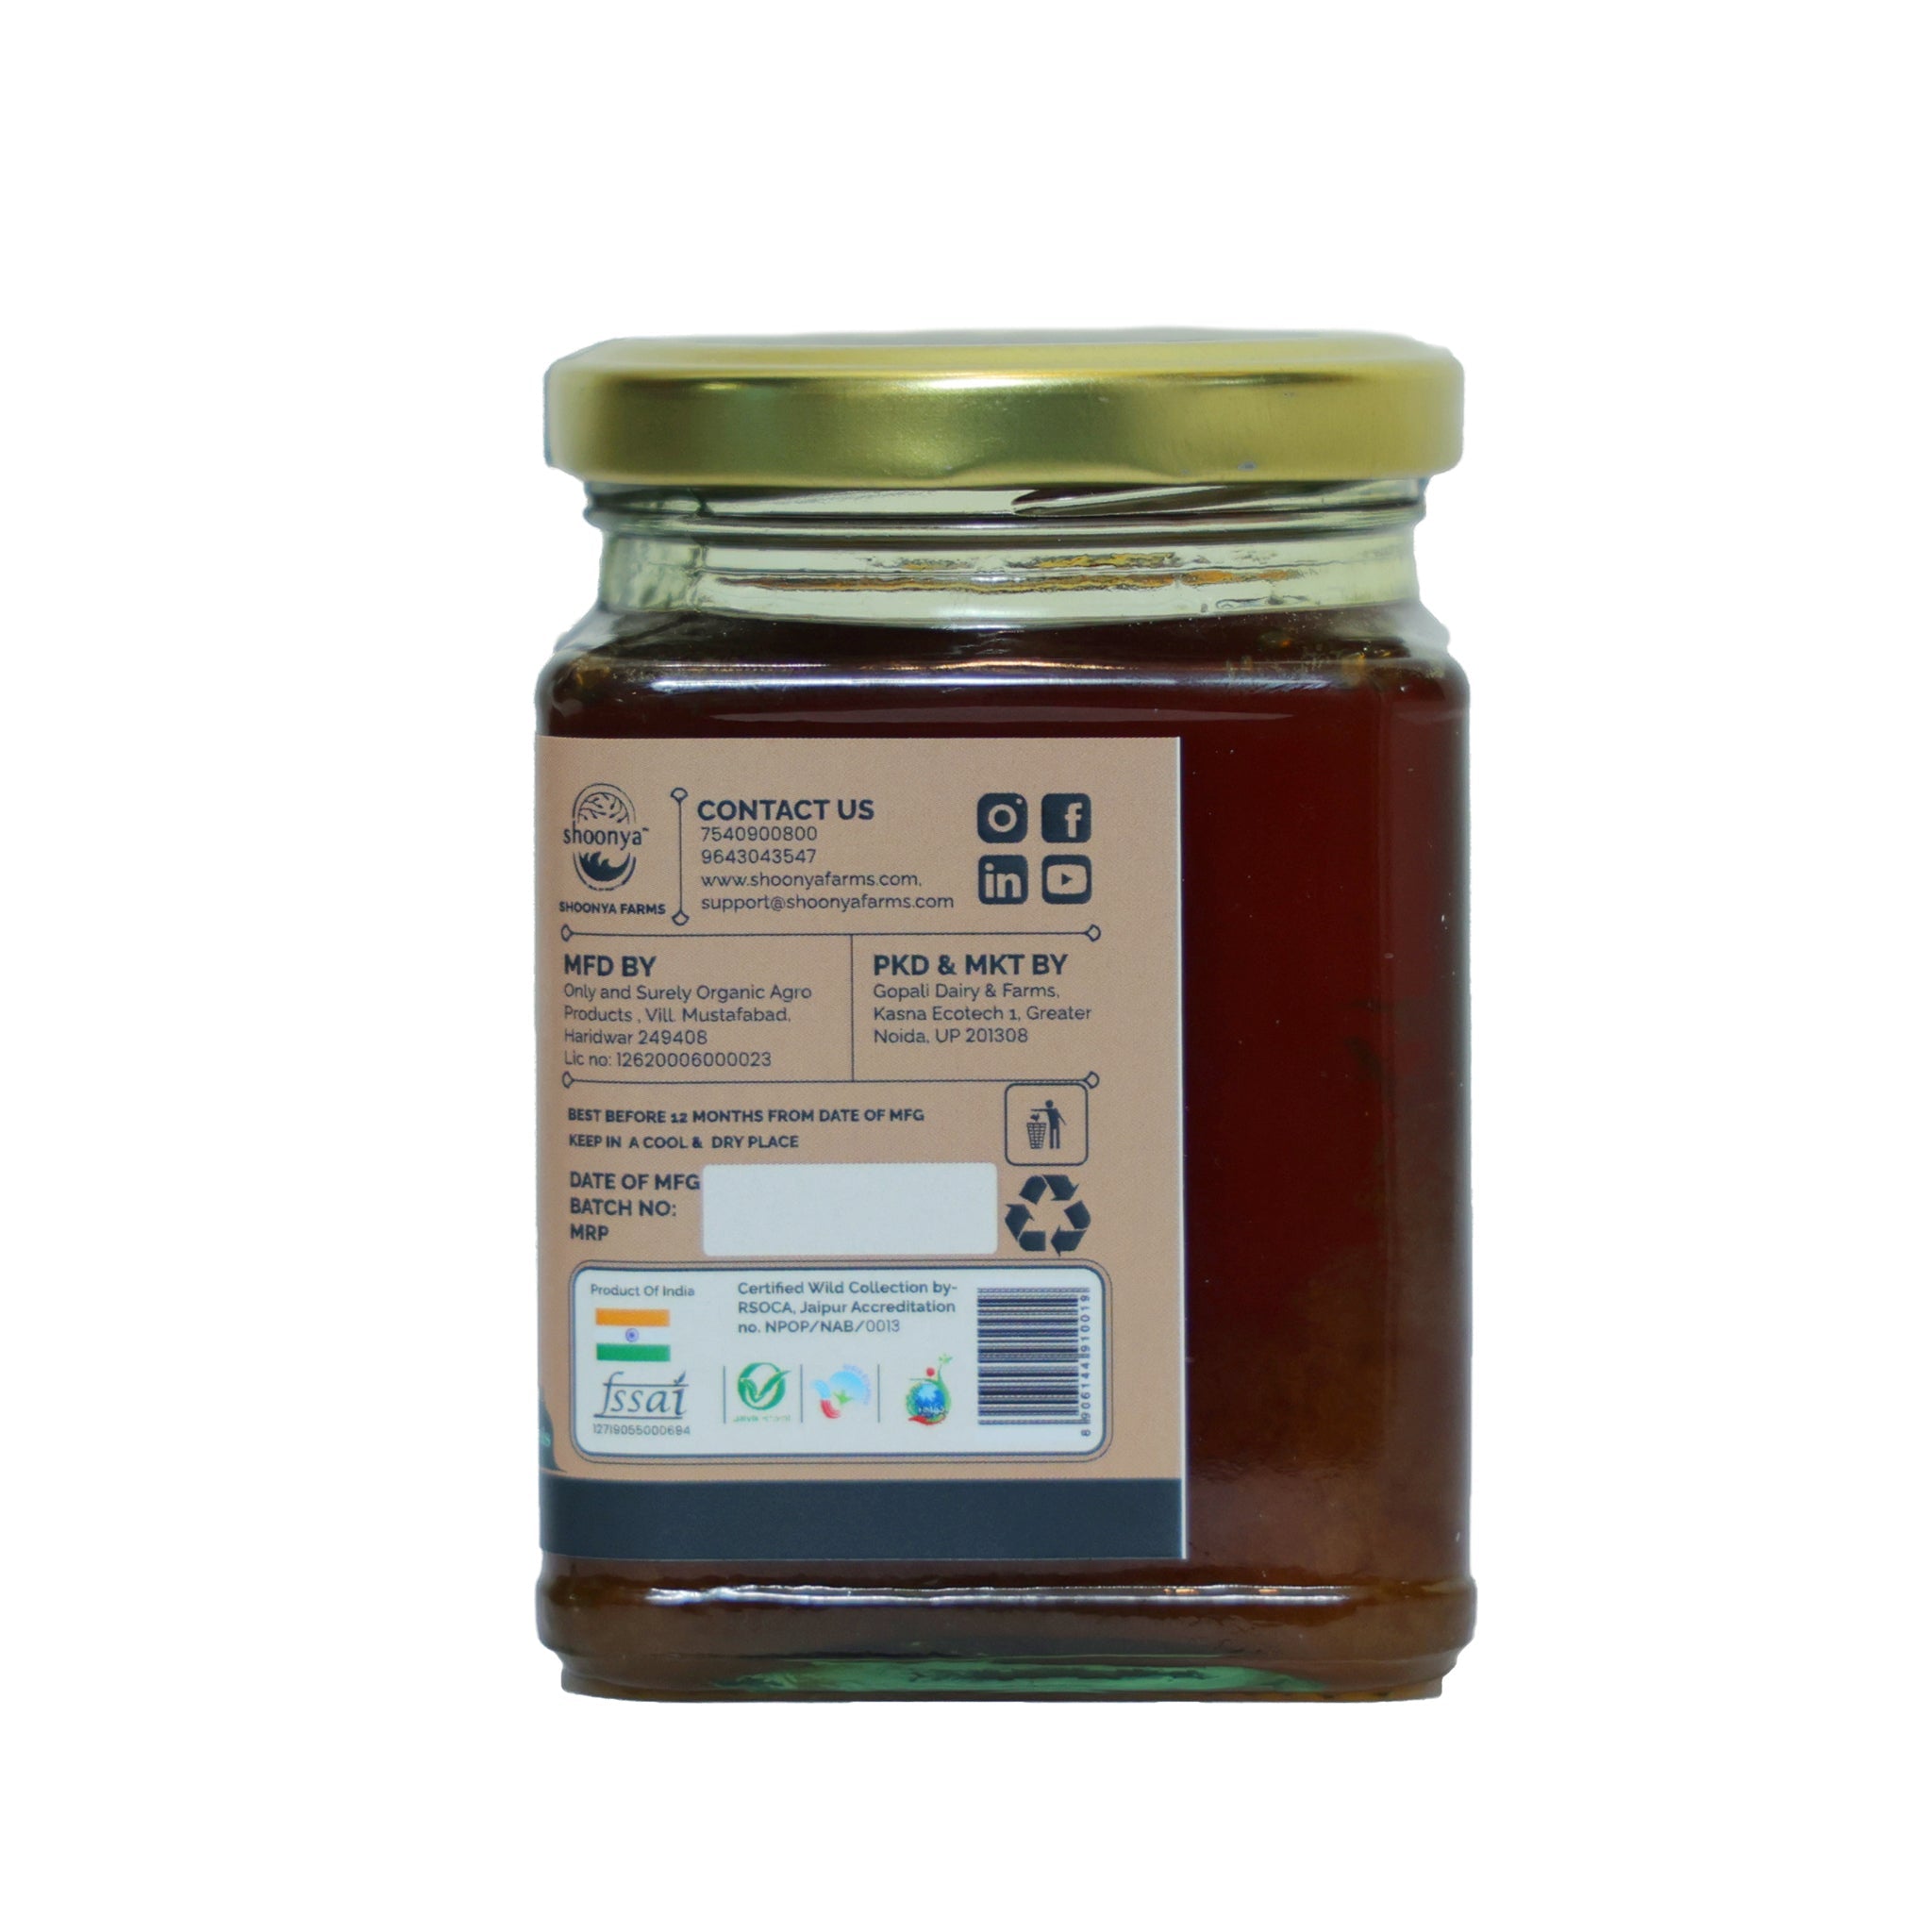 Multi-Flora Honey - Shoonya Farms